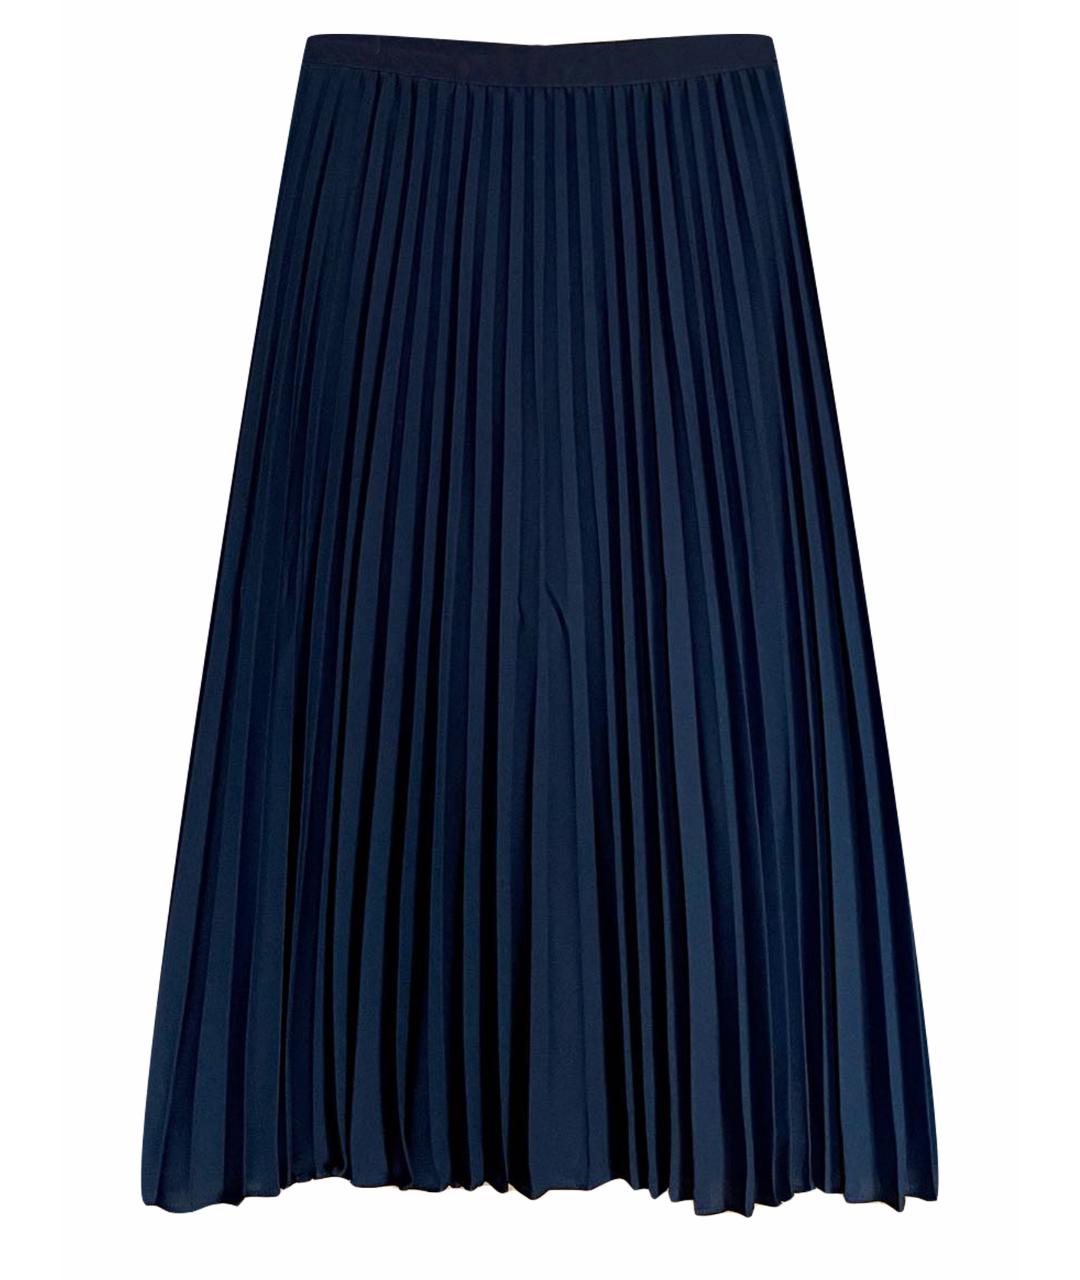 MARINA RINALDI Темно-синяя полиэстеровая юбка макси, фото 1